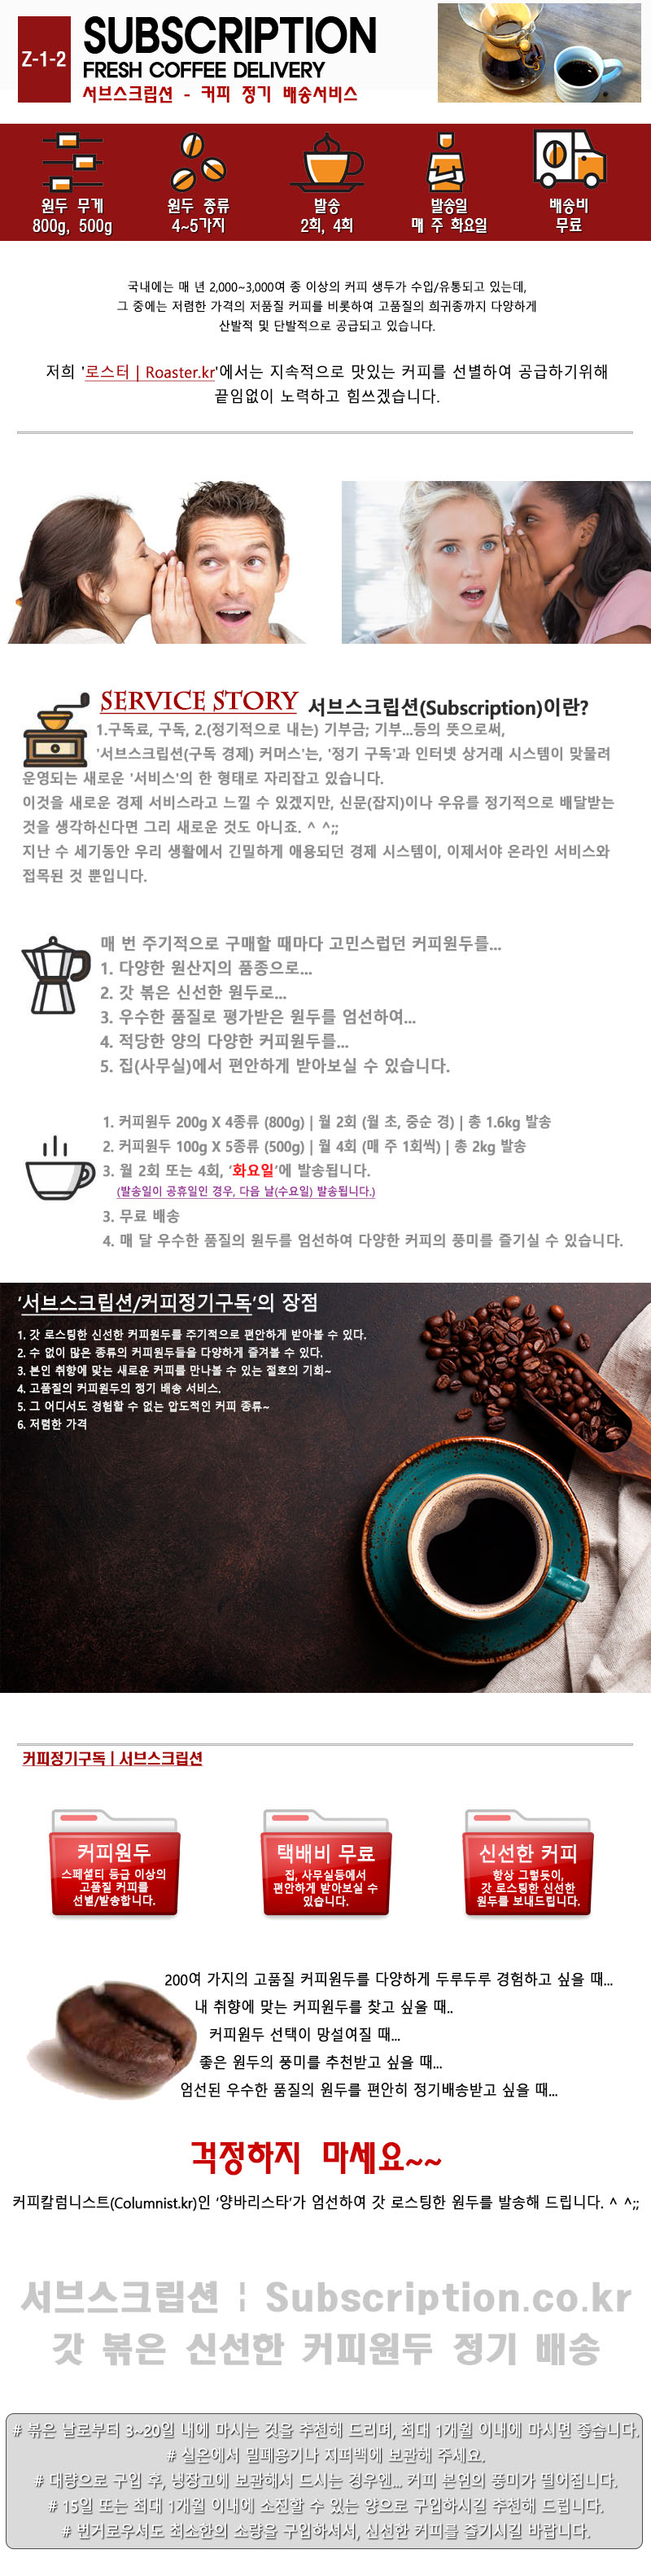 Z-1-2 서브스크립션(커피원두 정기구독)-매 주 자동 배송되는 다양한 커피의 맛과 향을 즐겨보세요.